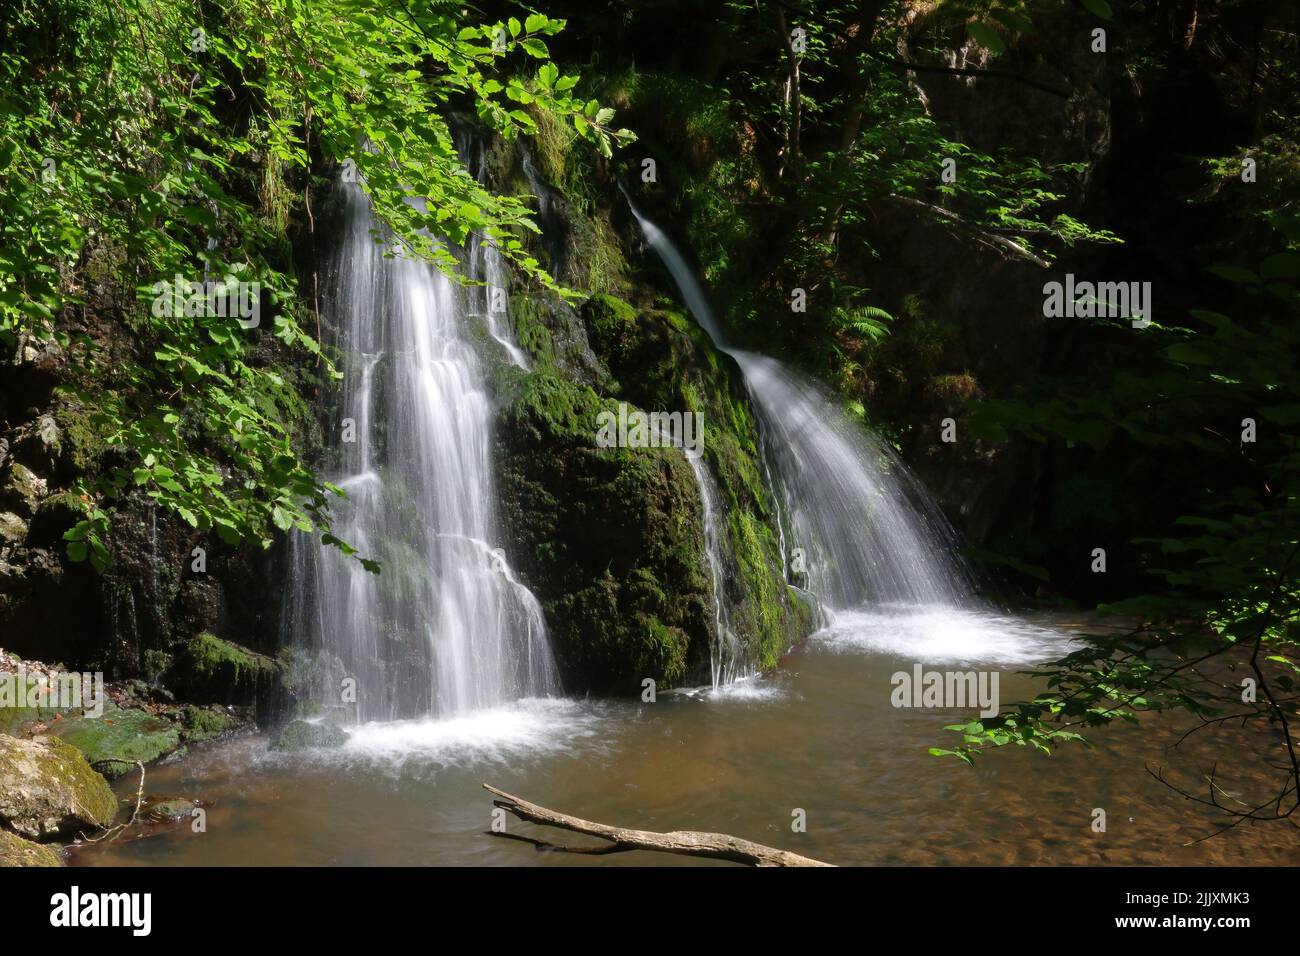 A small waterfall in Fairy Glen, Rosemarkie, Scotland Stock Photo